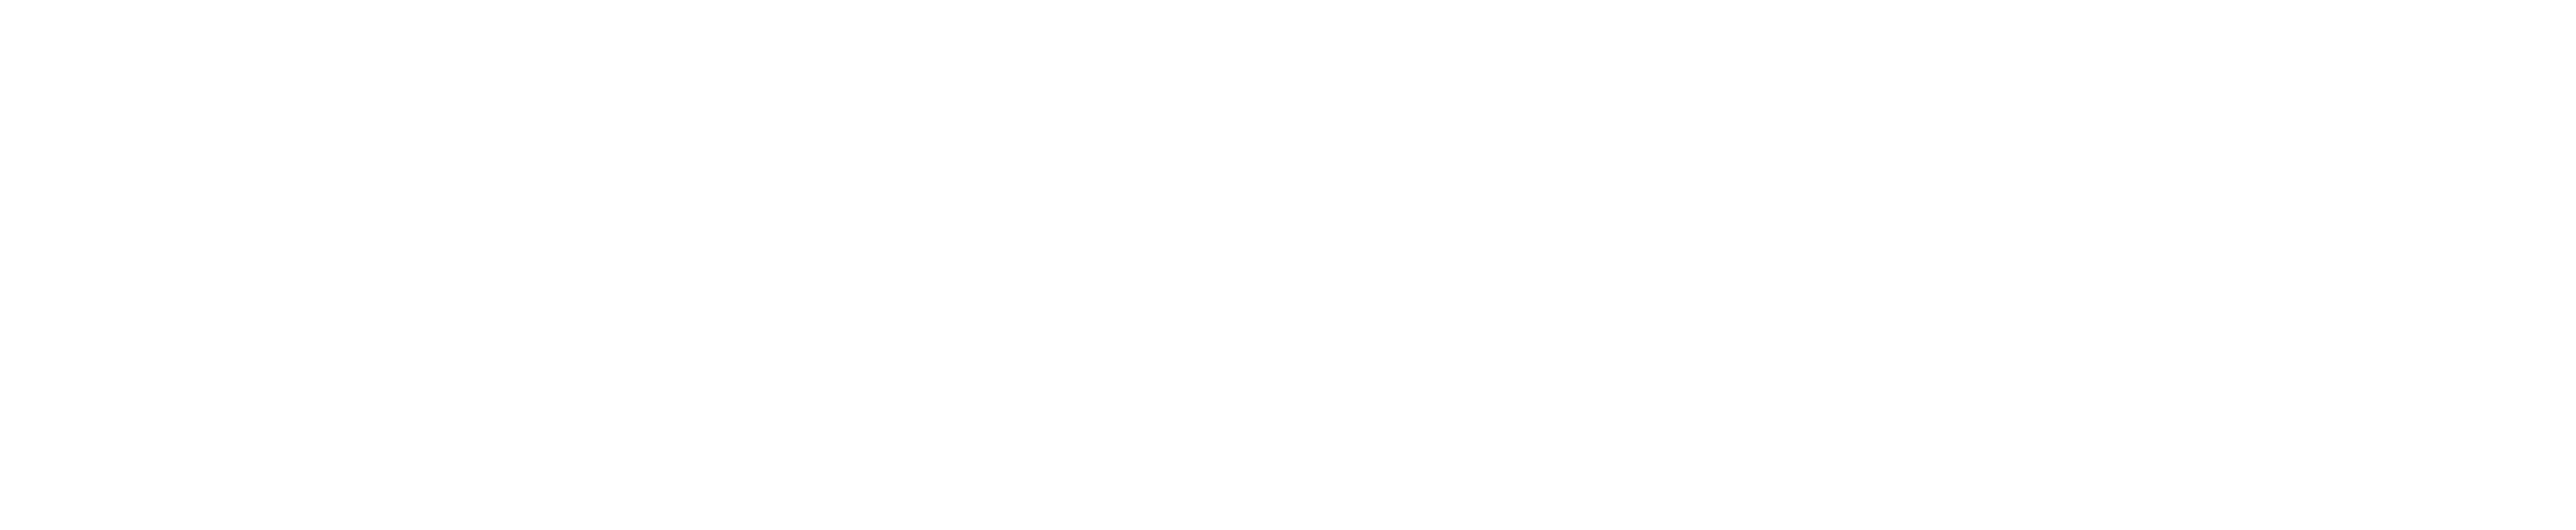 mansionhaus-logo2